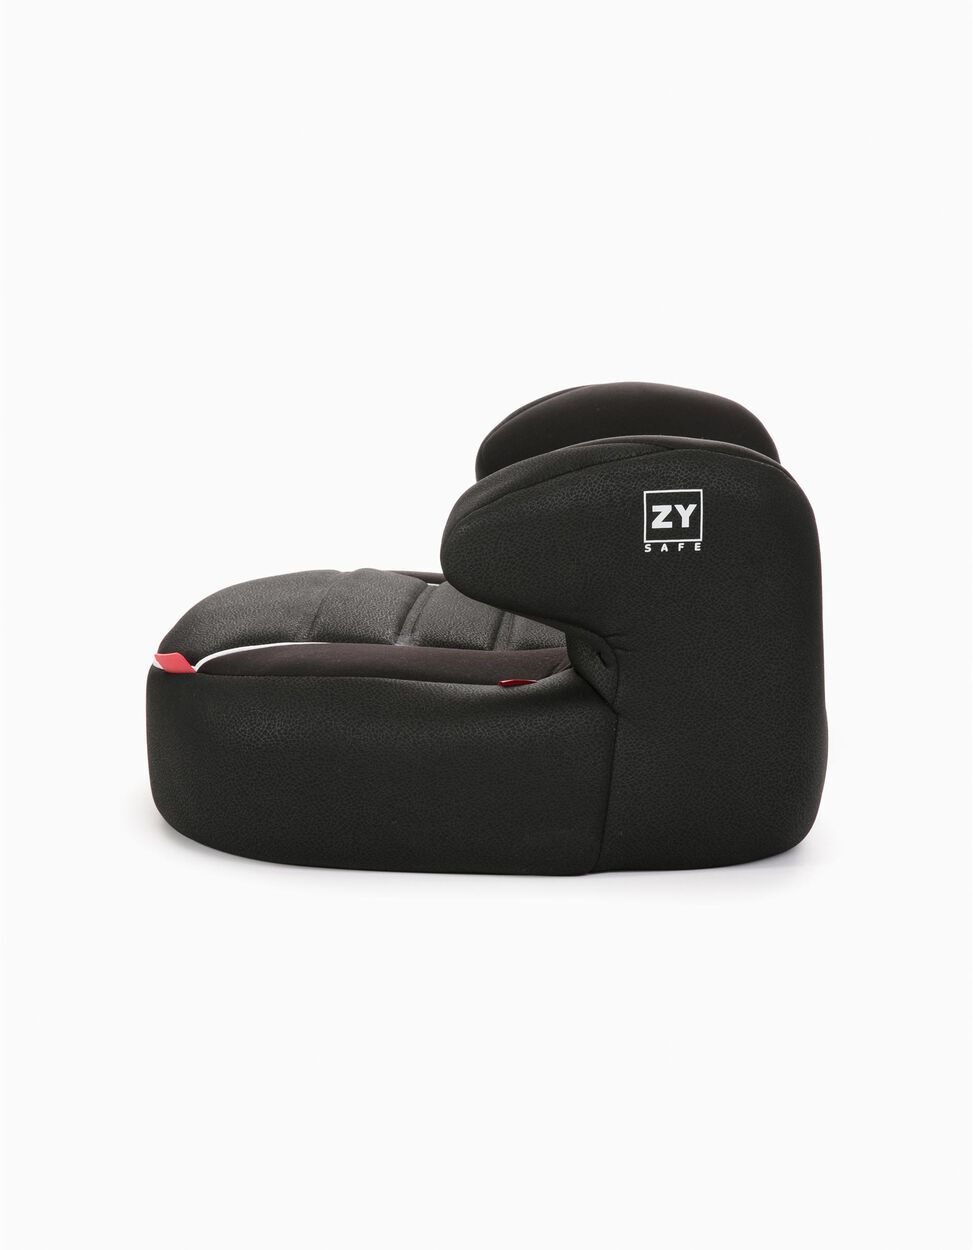 Child Booster Seat Primecare Prestige Zy Safe, Black